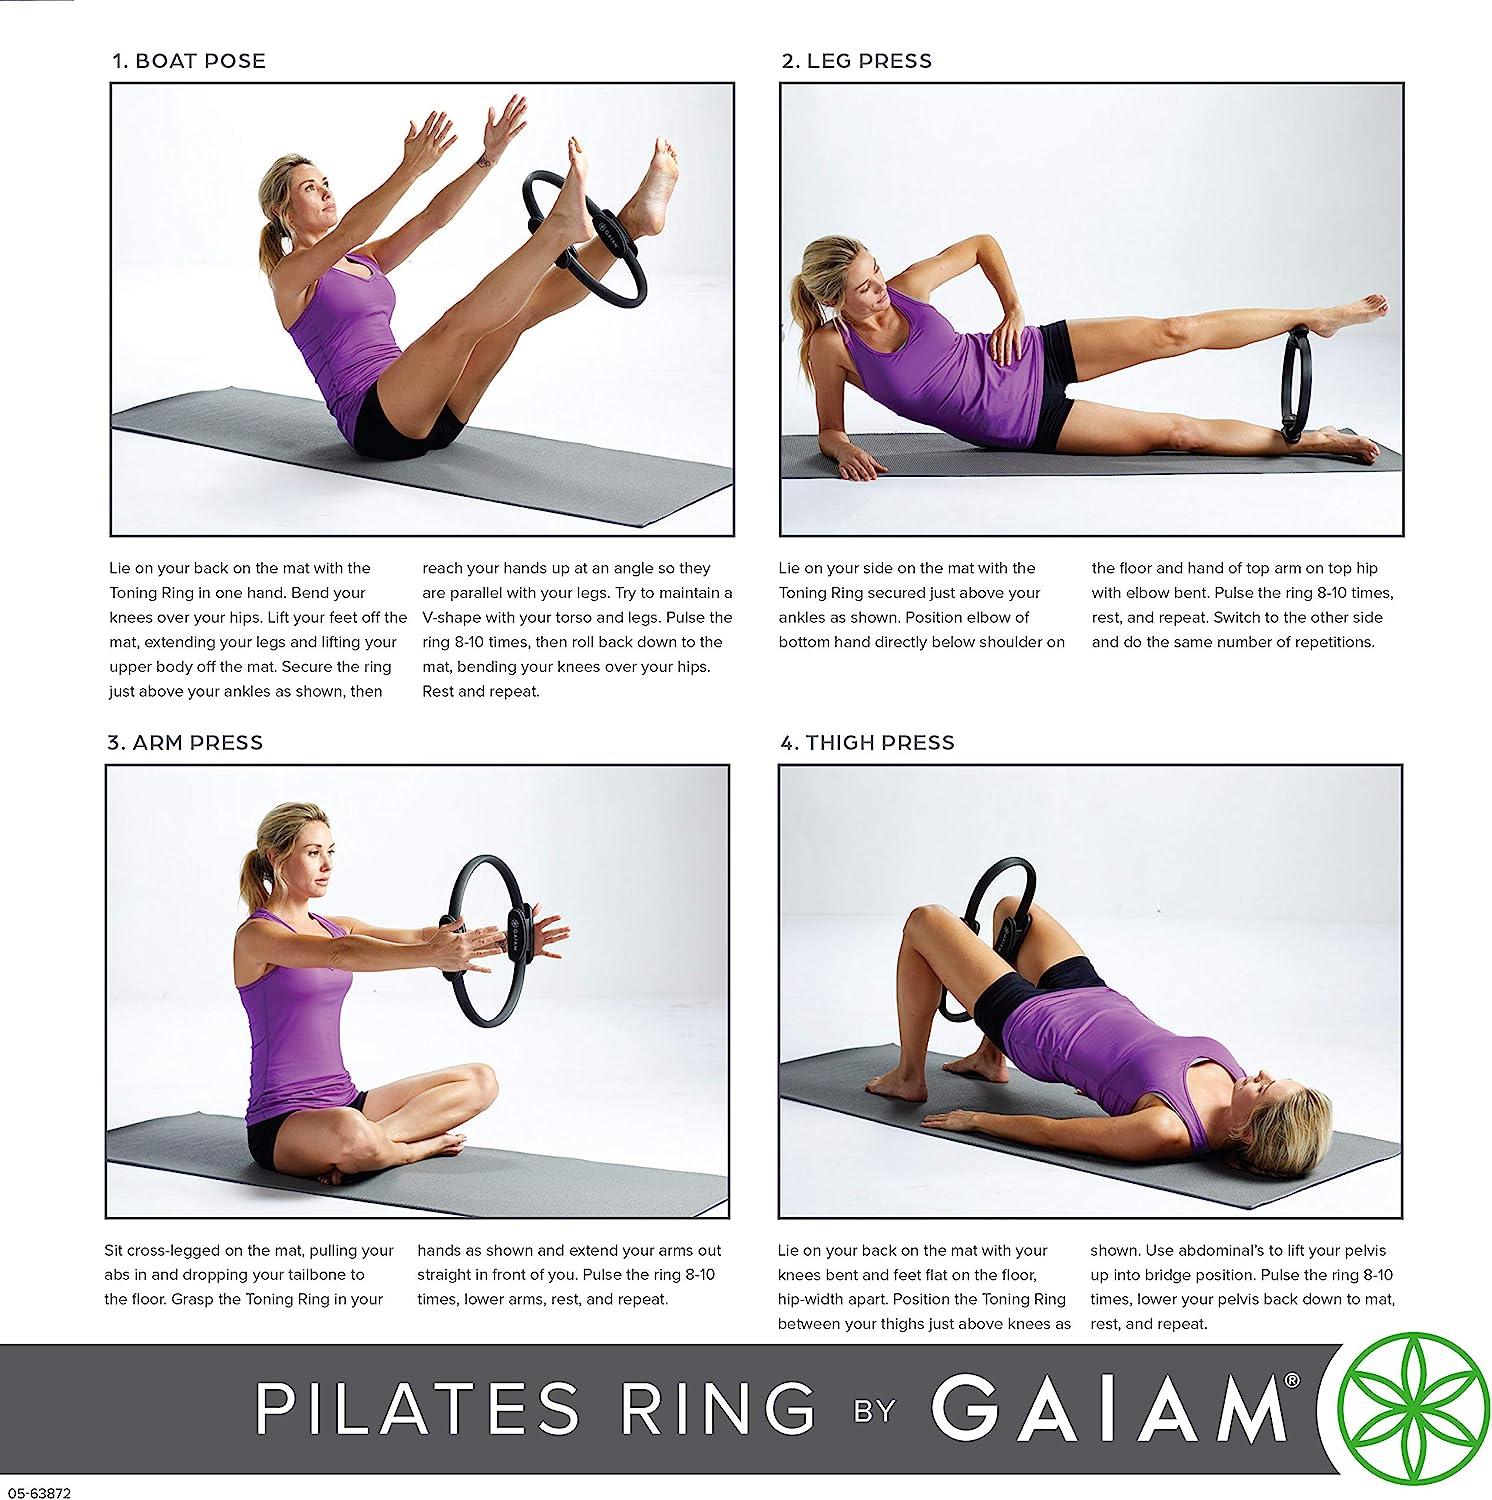 Gaiam Pilates Ring 15 Fitness Circle - Lightweight & Durable Foam